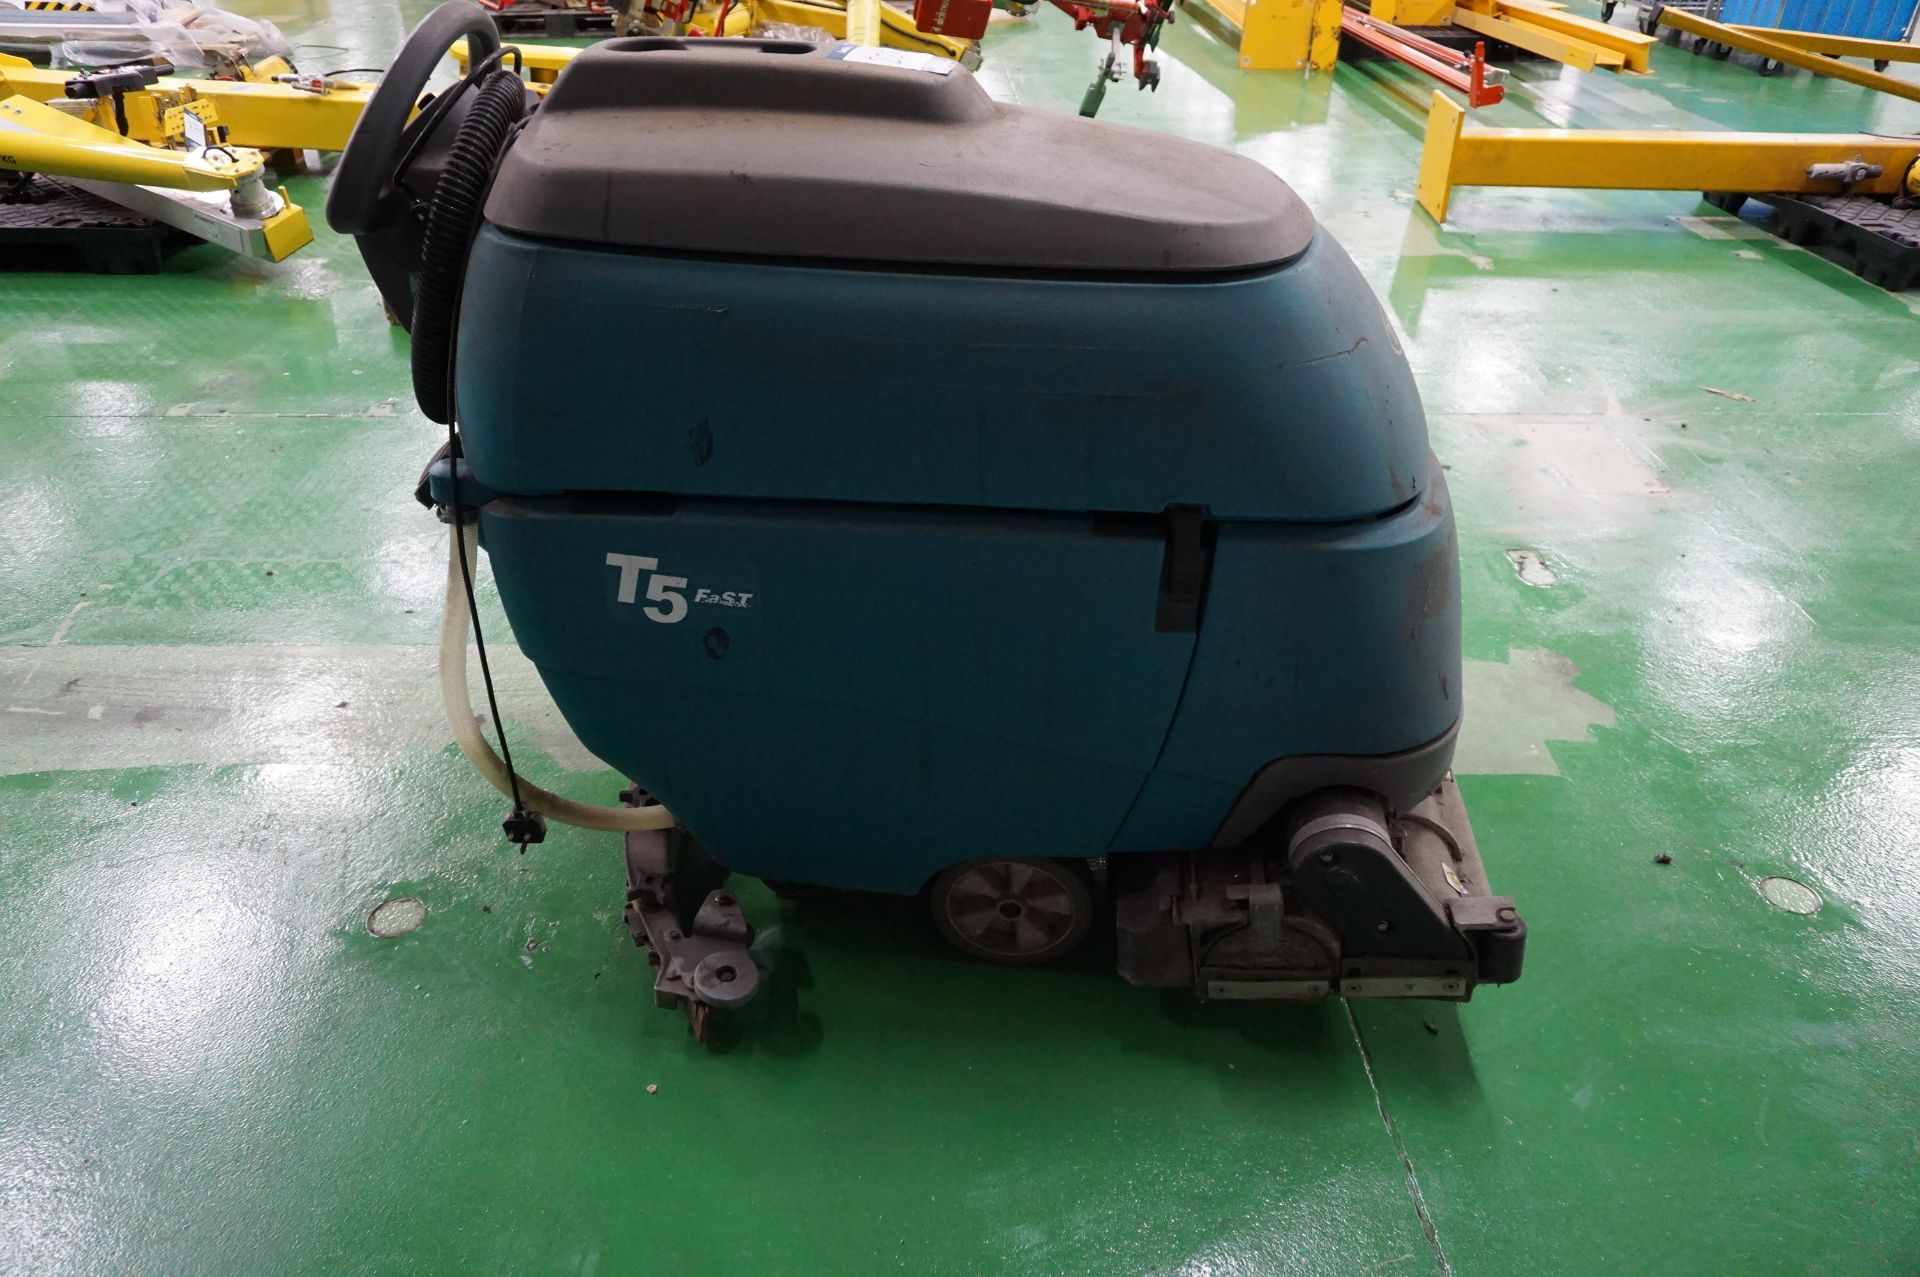 Tennant T5 fast industrial floor scrubber/dryer